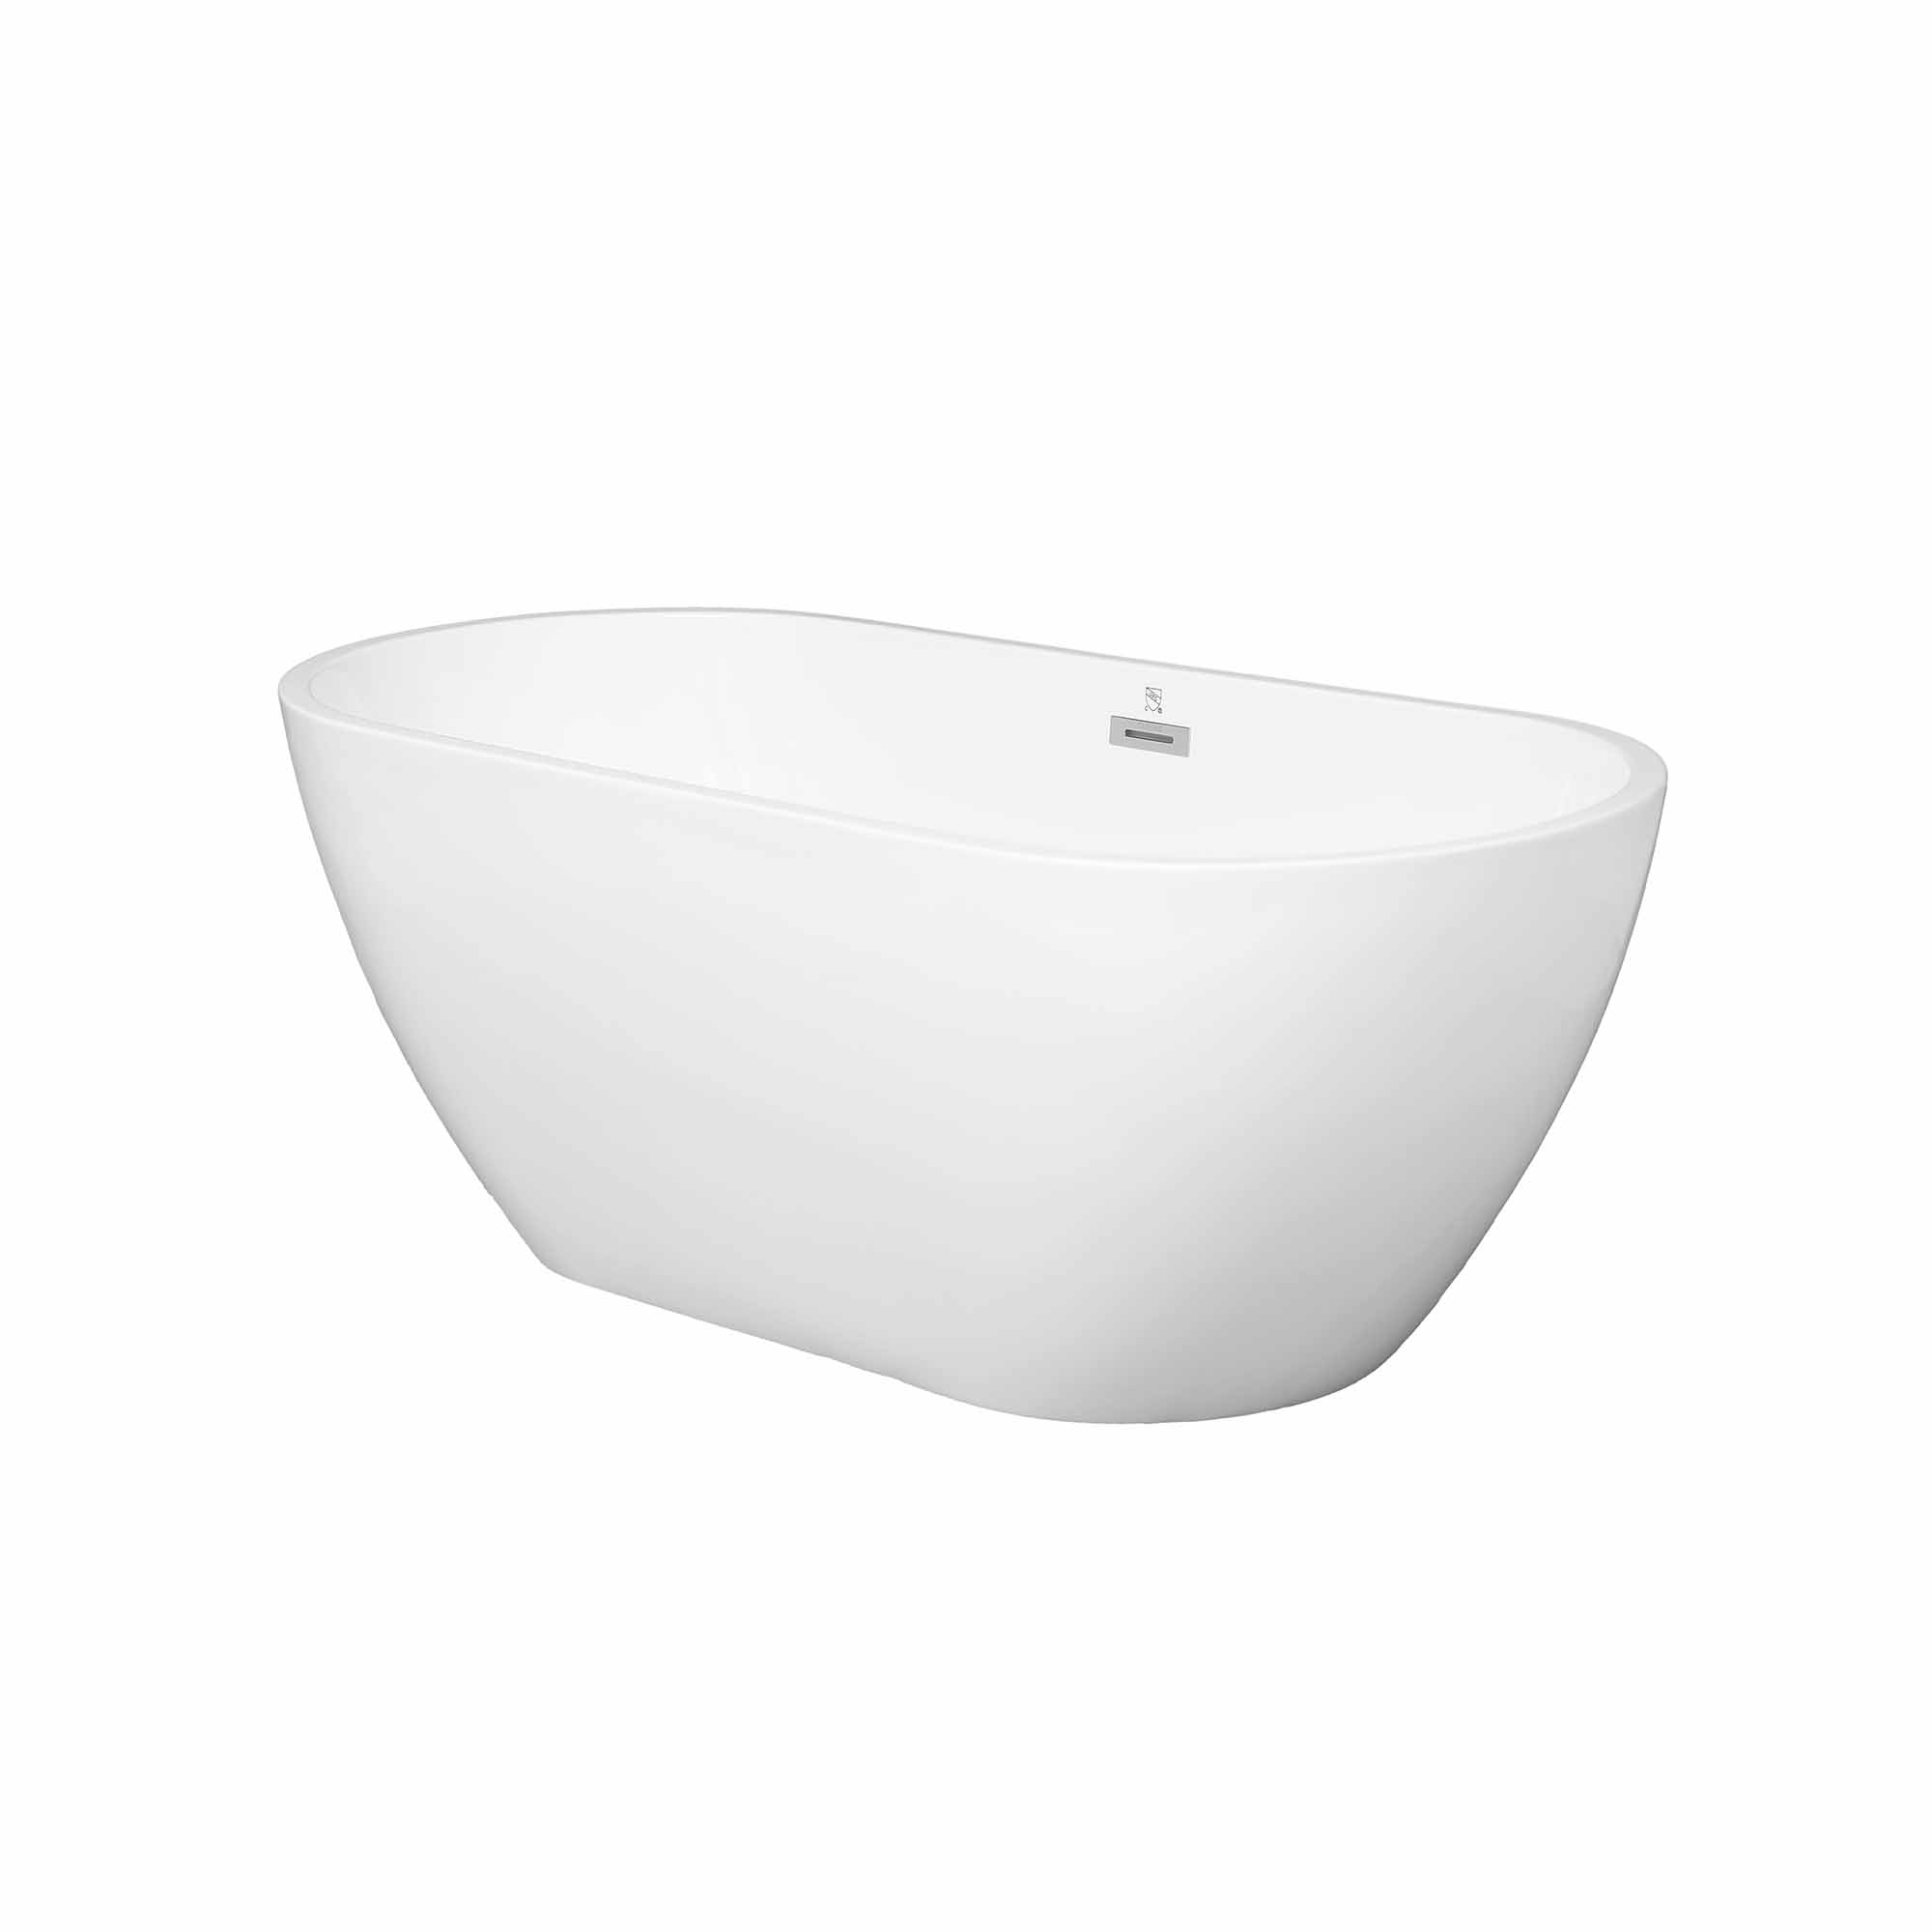  60 Inch Acrylic Alcove Freestanding Soaking Bathtub in White